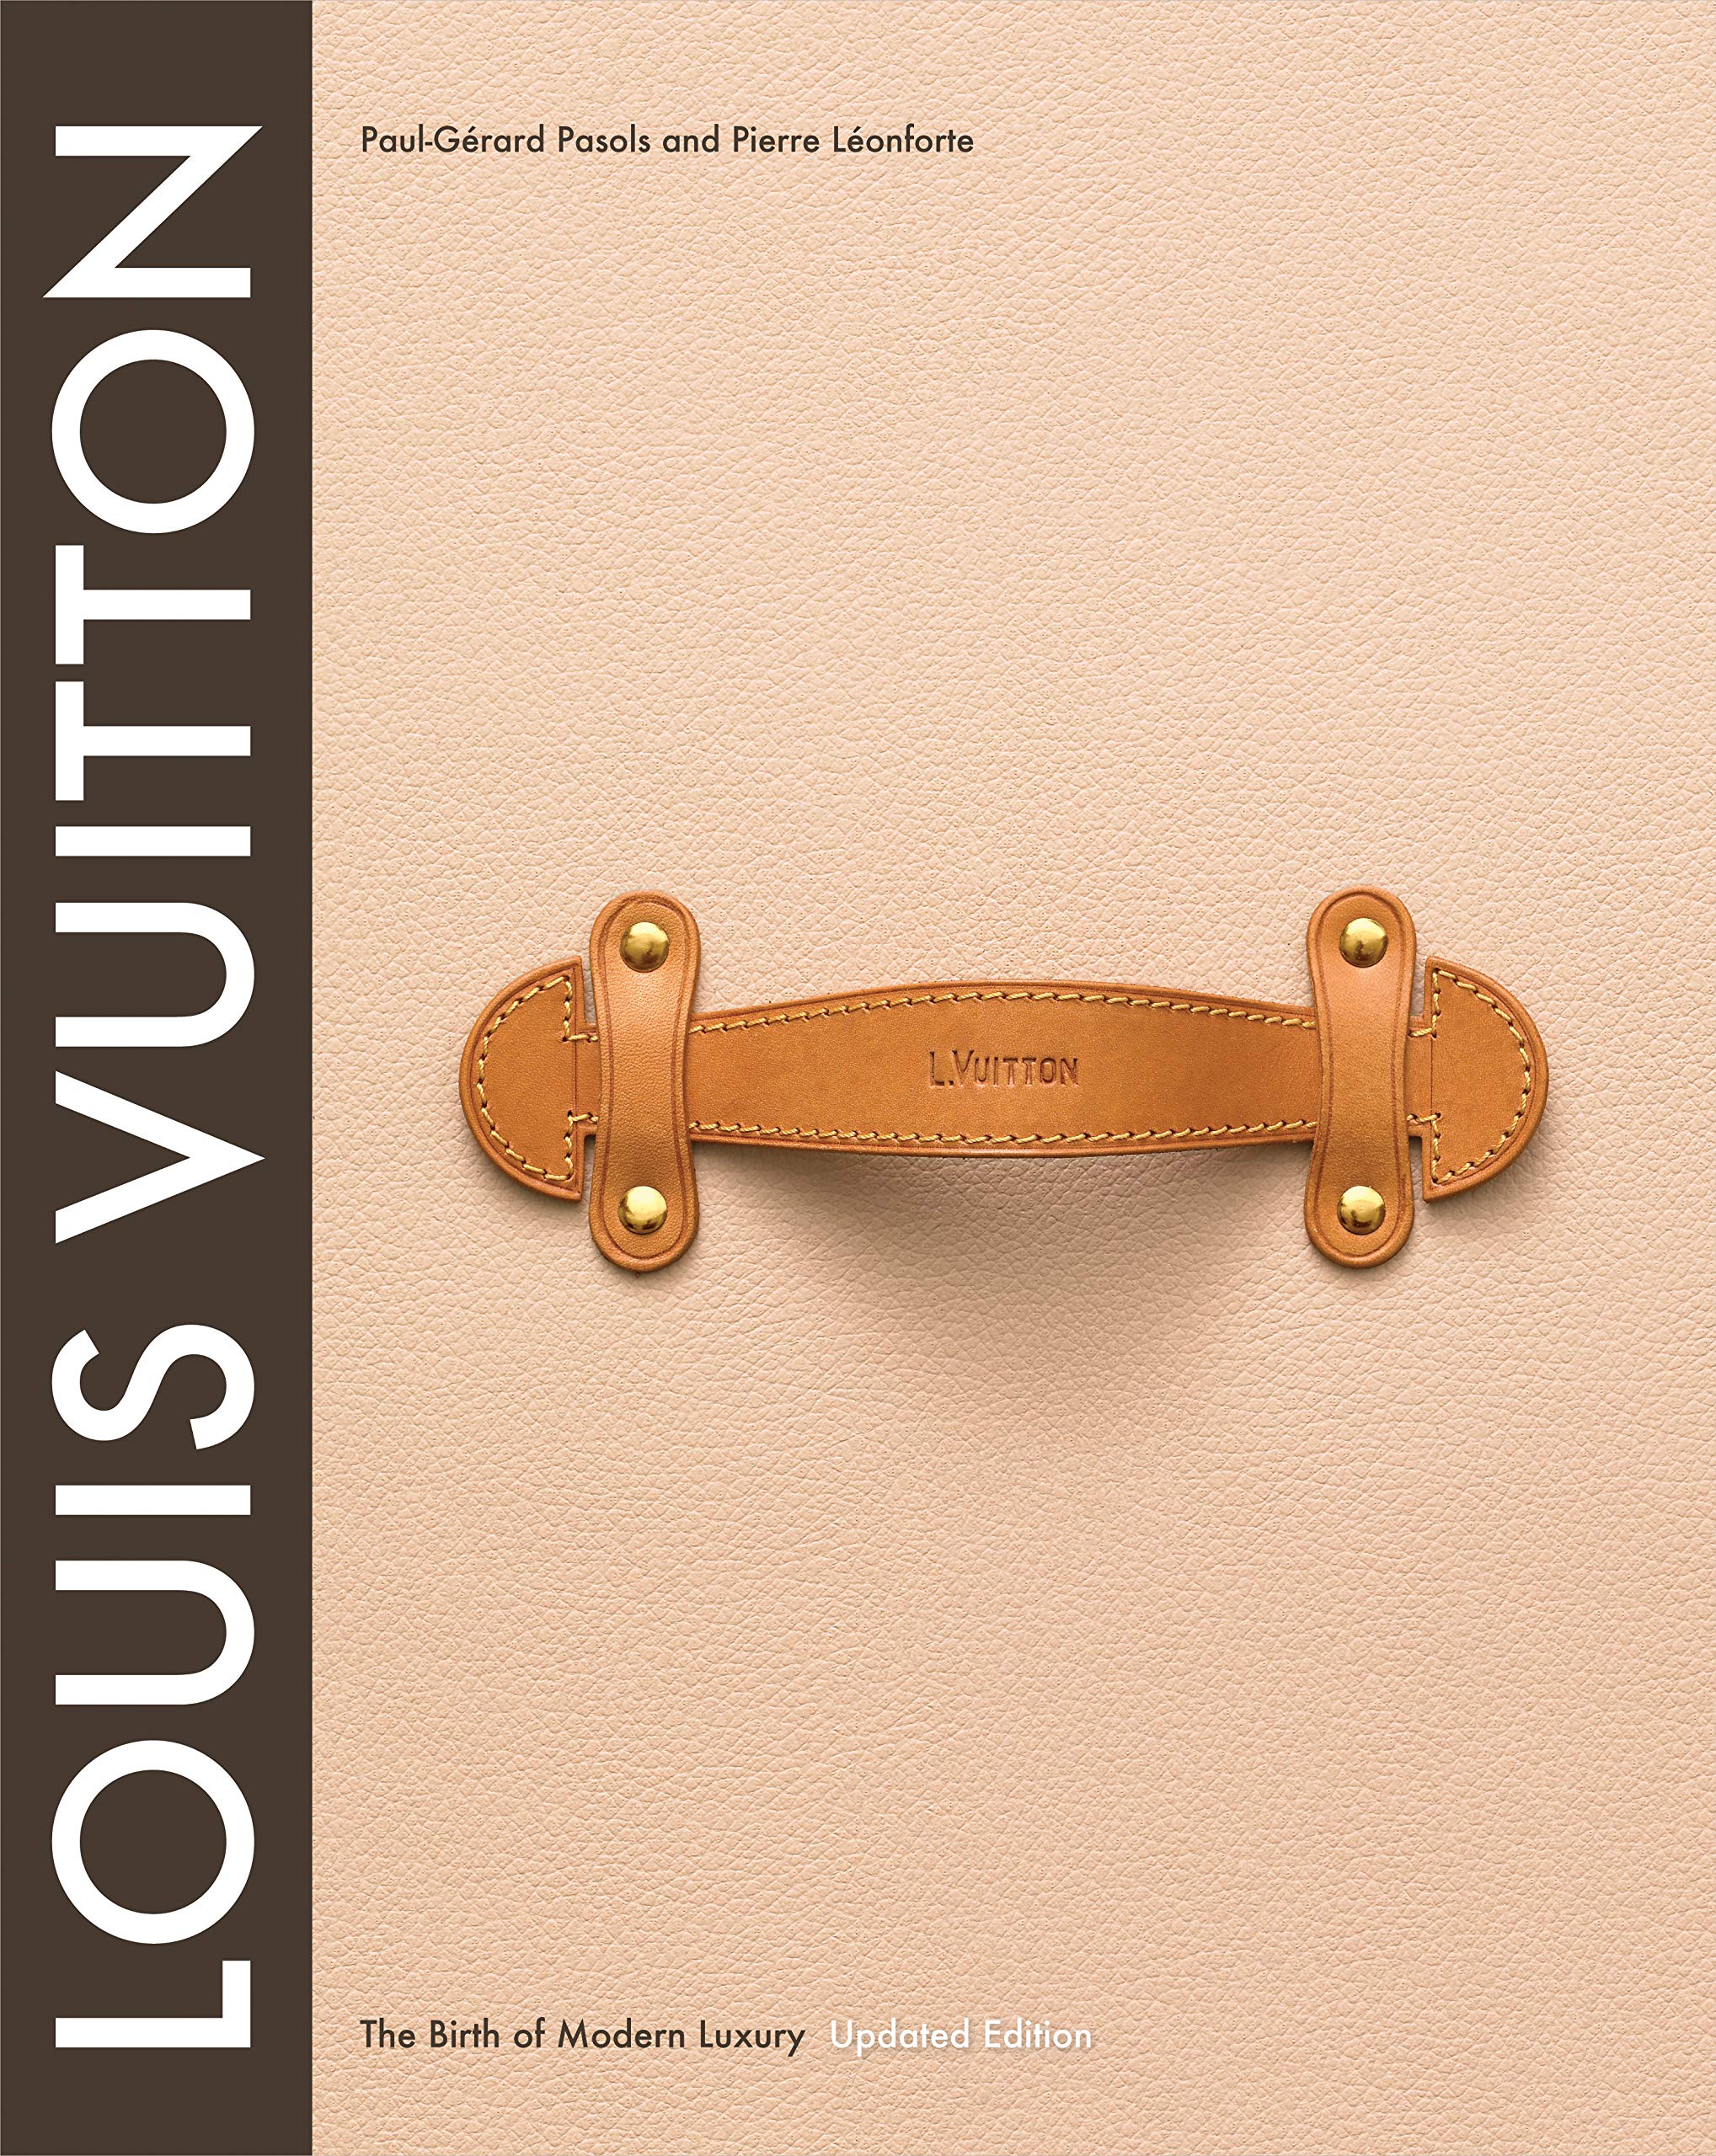 $59 Louis Vuitton book 🔥 The perfect coffee table book or decor book!